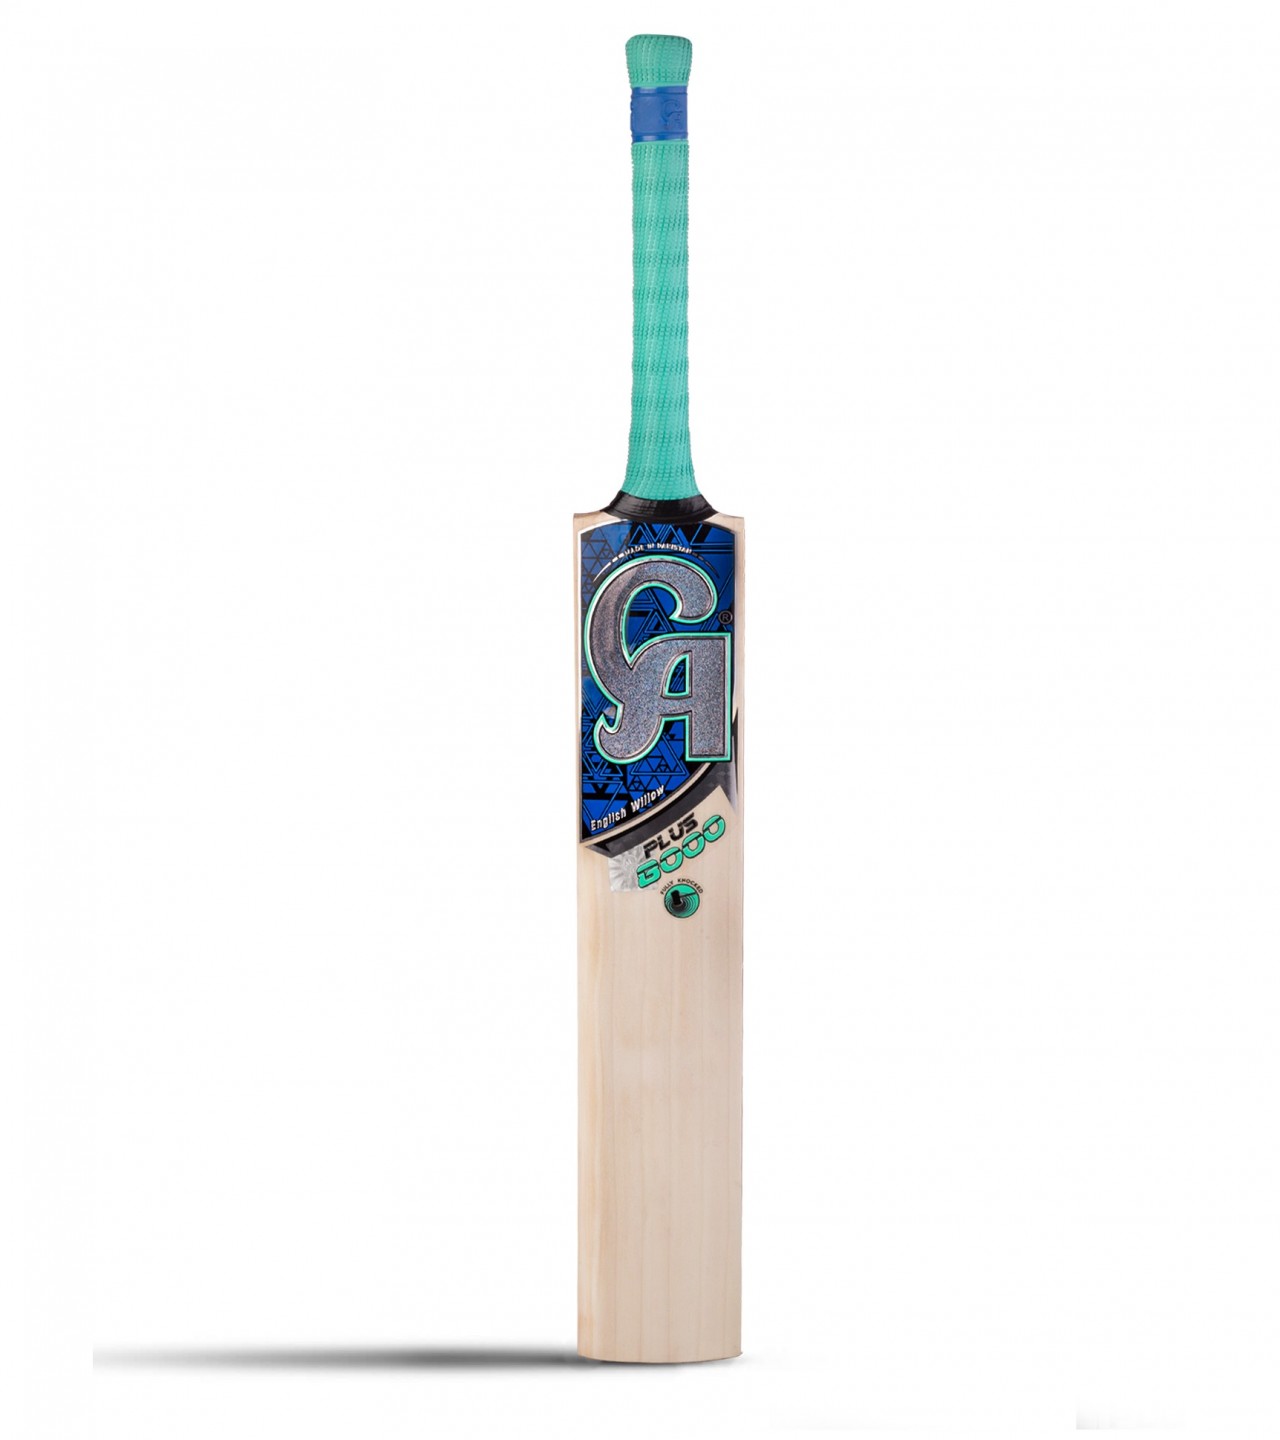 CA PLUS 8000 Hard Ball Cricket Bat